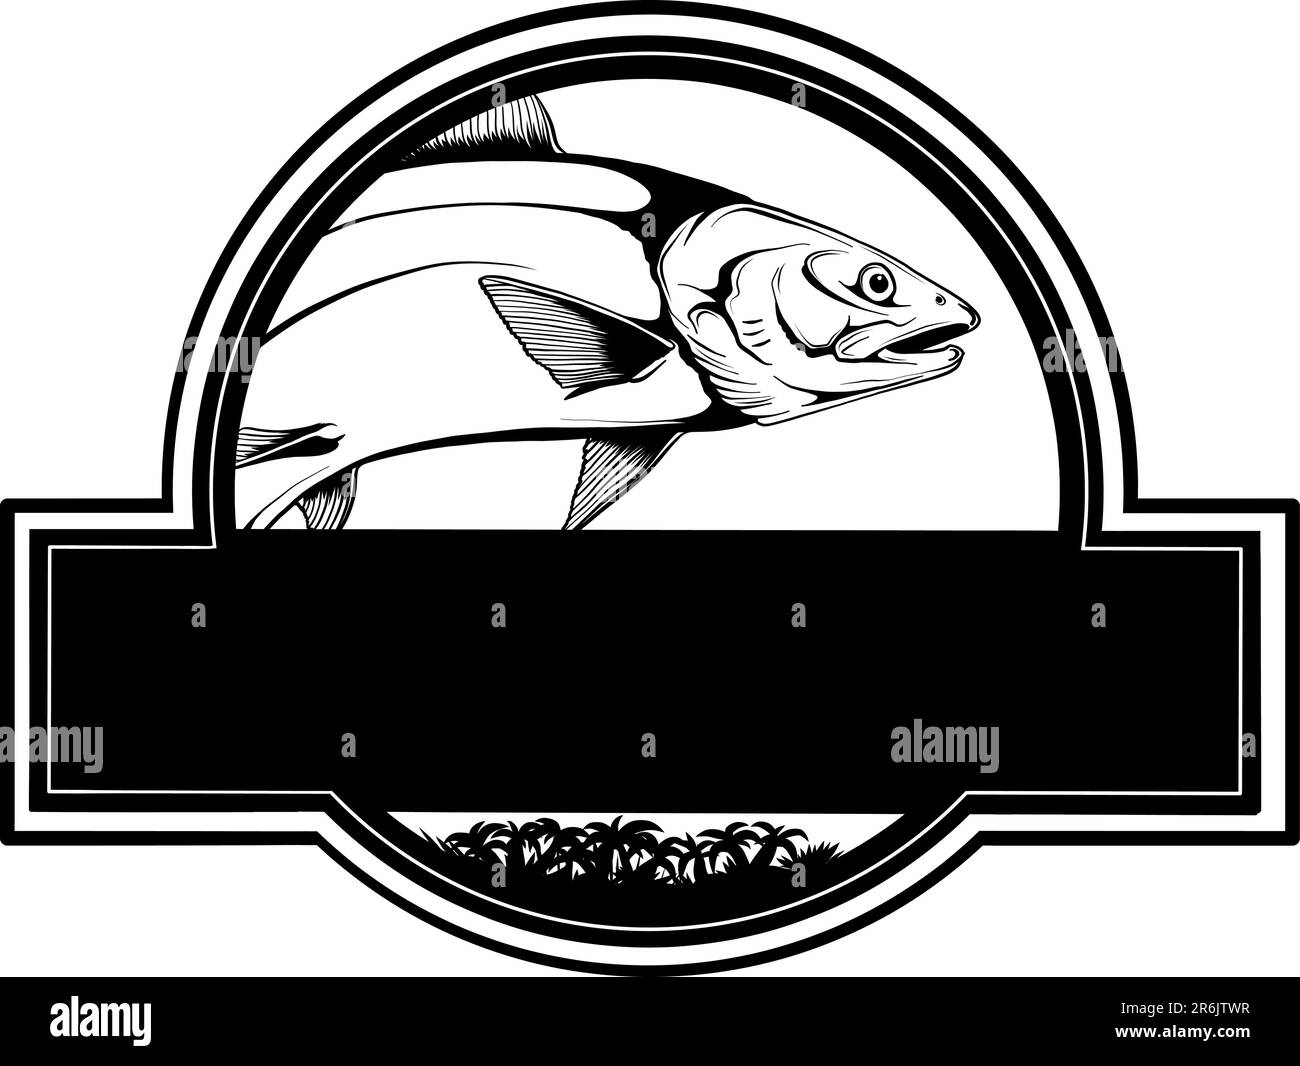 vector illustration of Monochrome Salmon fish silhouette logo design Stock Vector